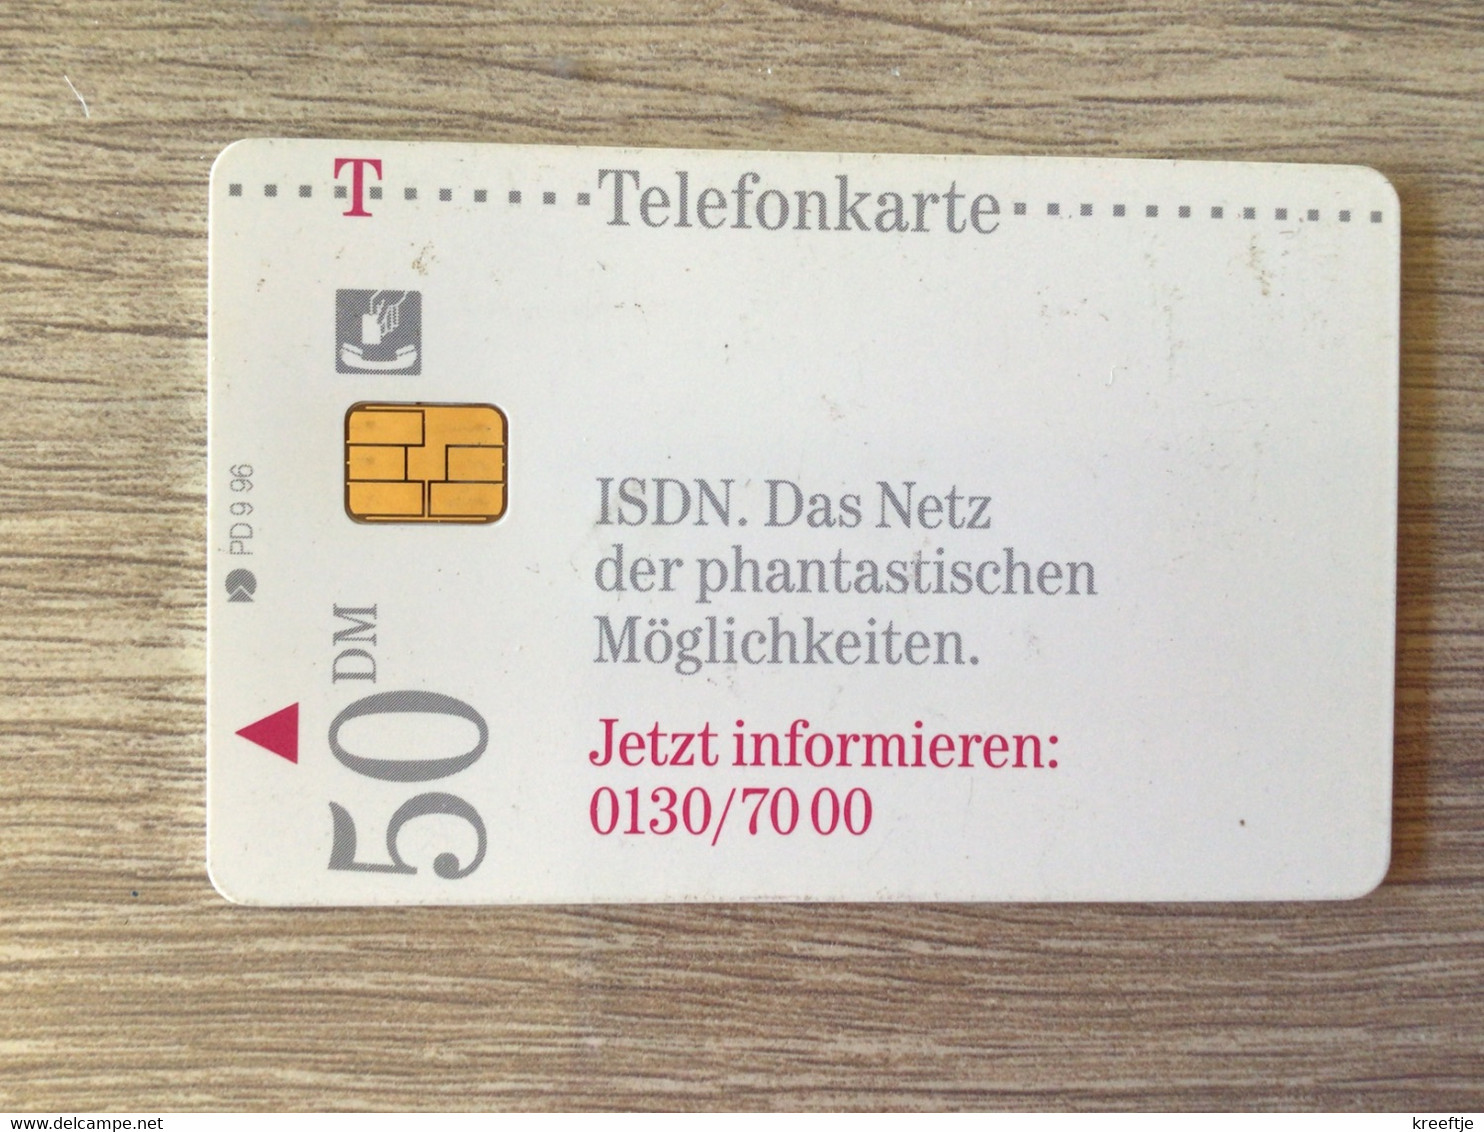 Telefoonkaart. Telefonkarte Deutsche Telekom - Vorläufer